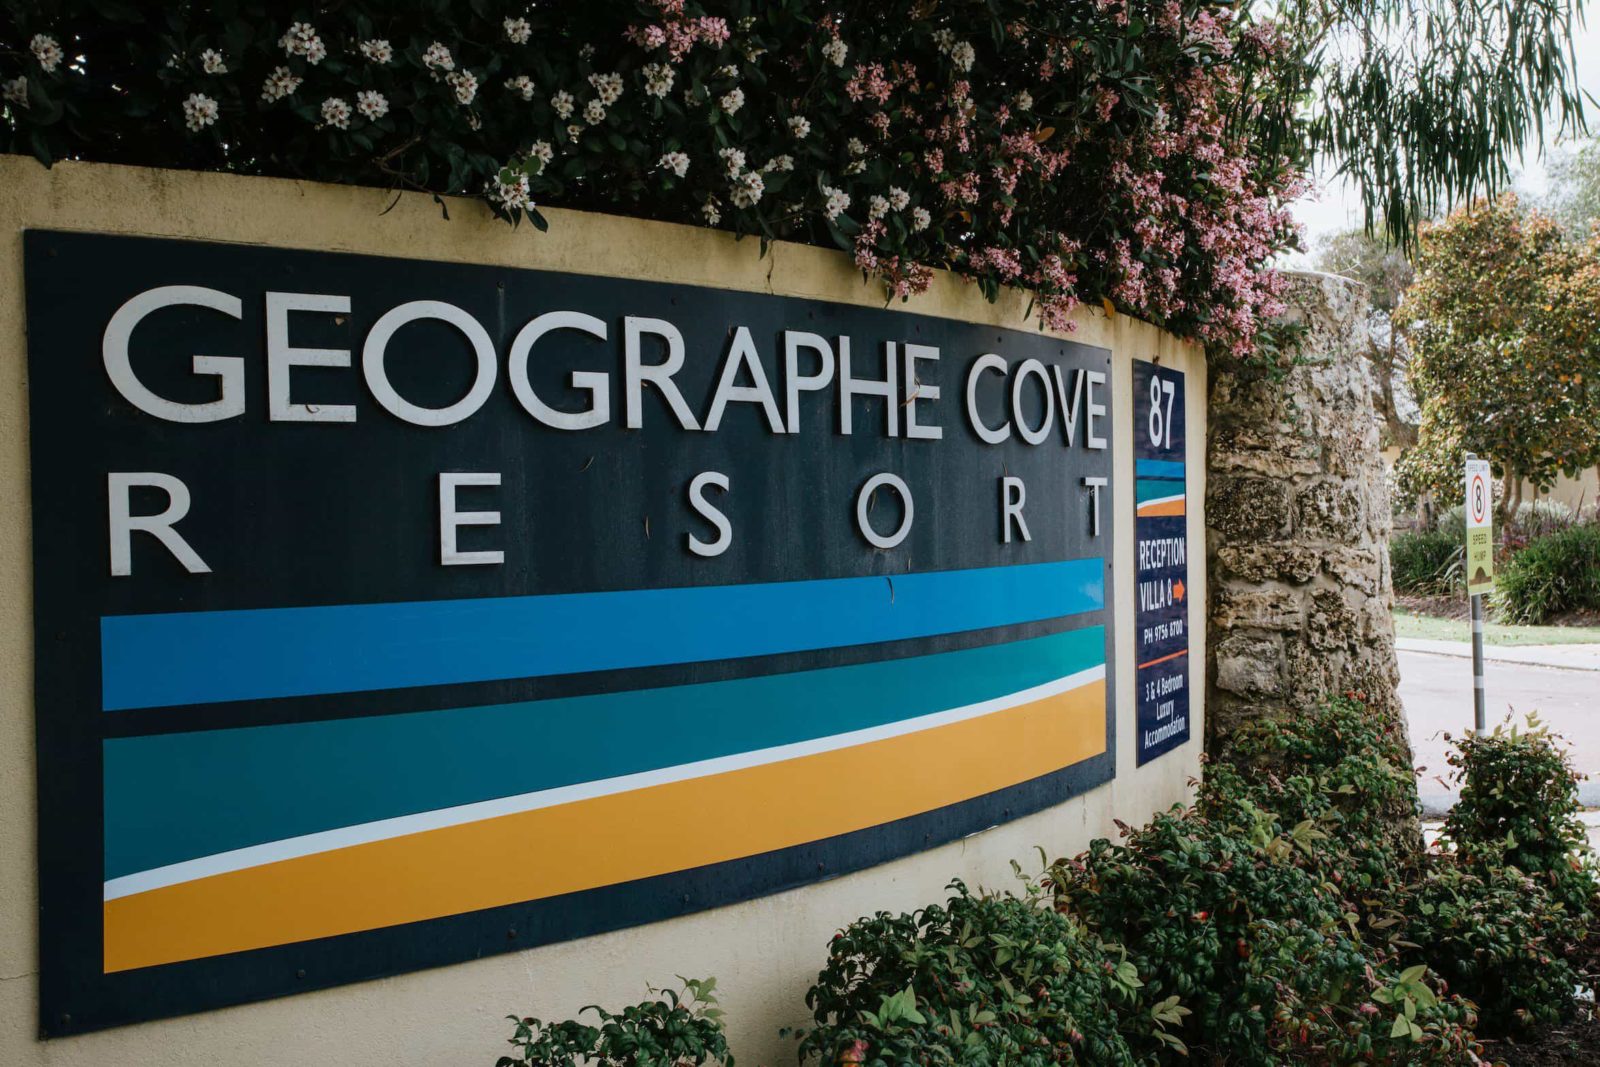 Geographe Cove Resort, Dunsborough, Western Australia